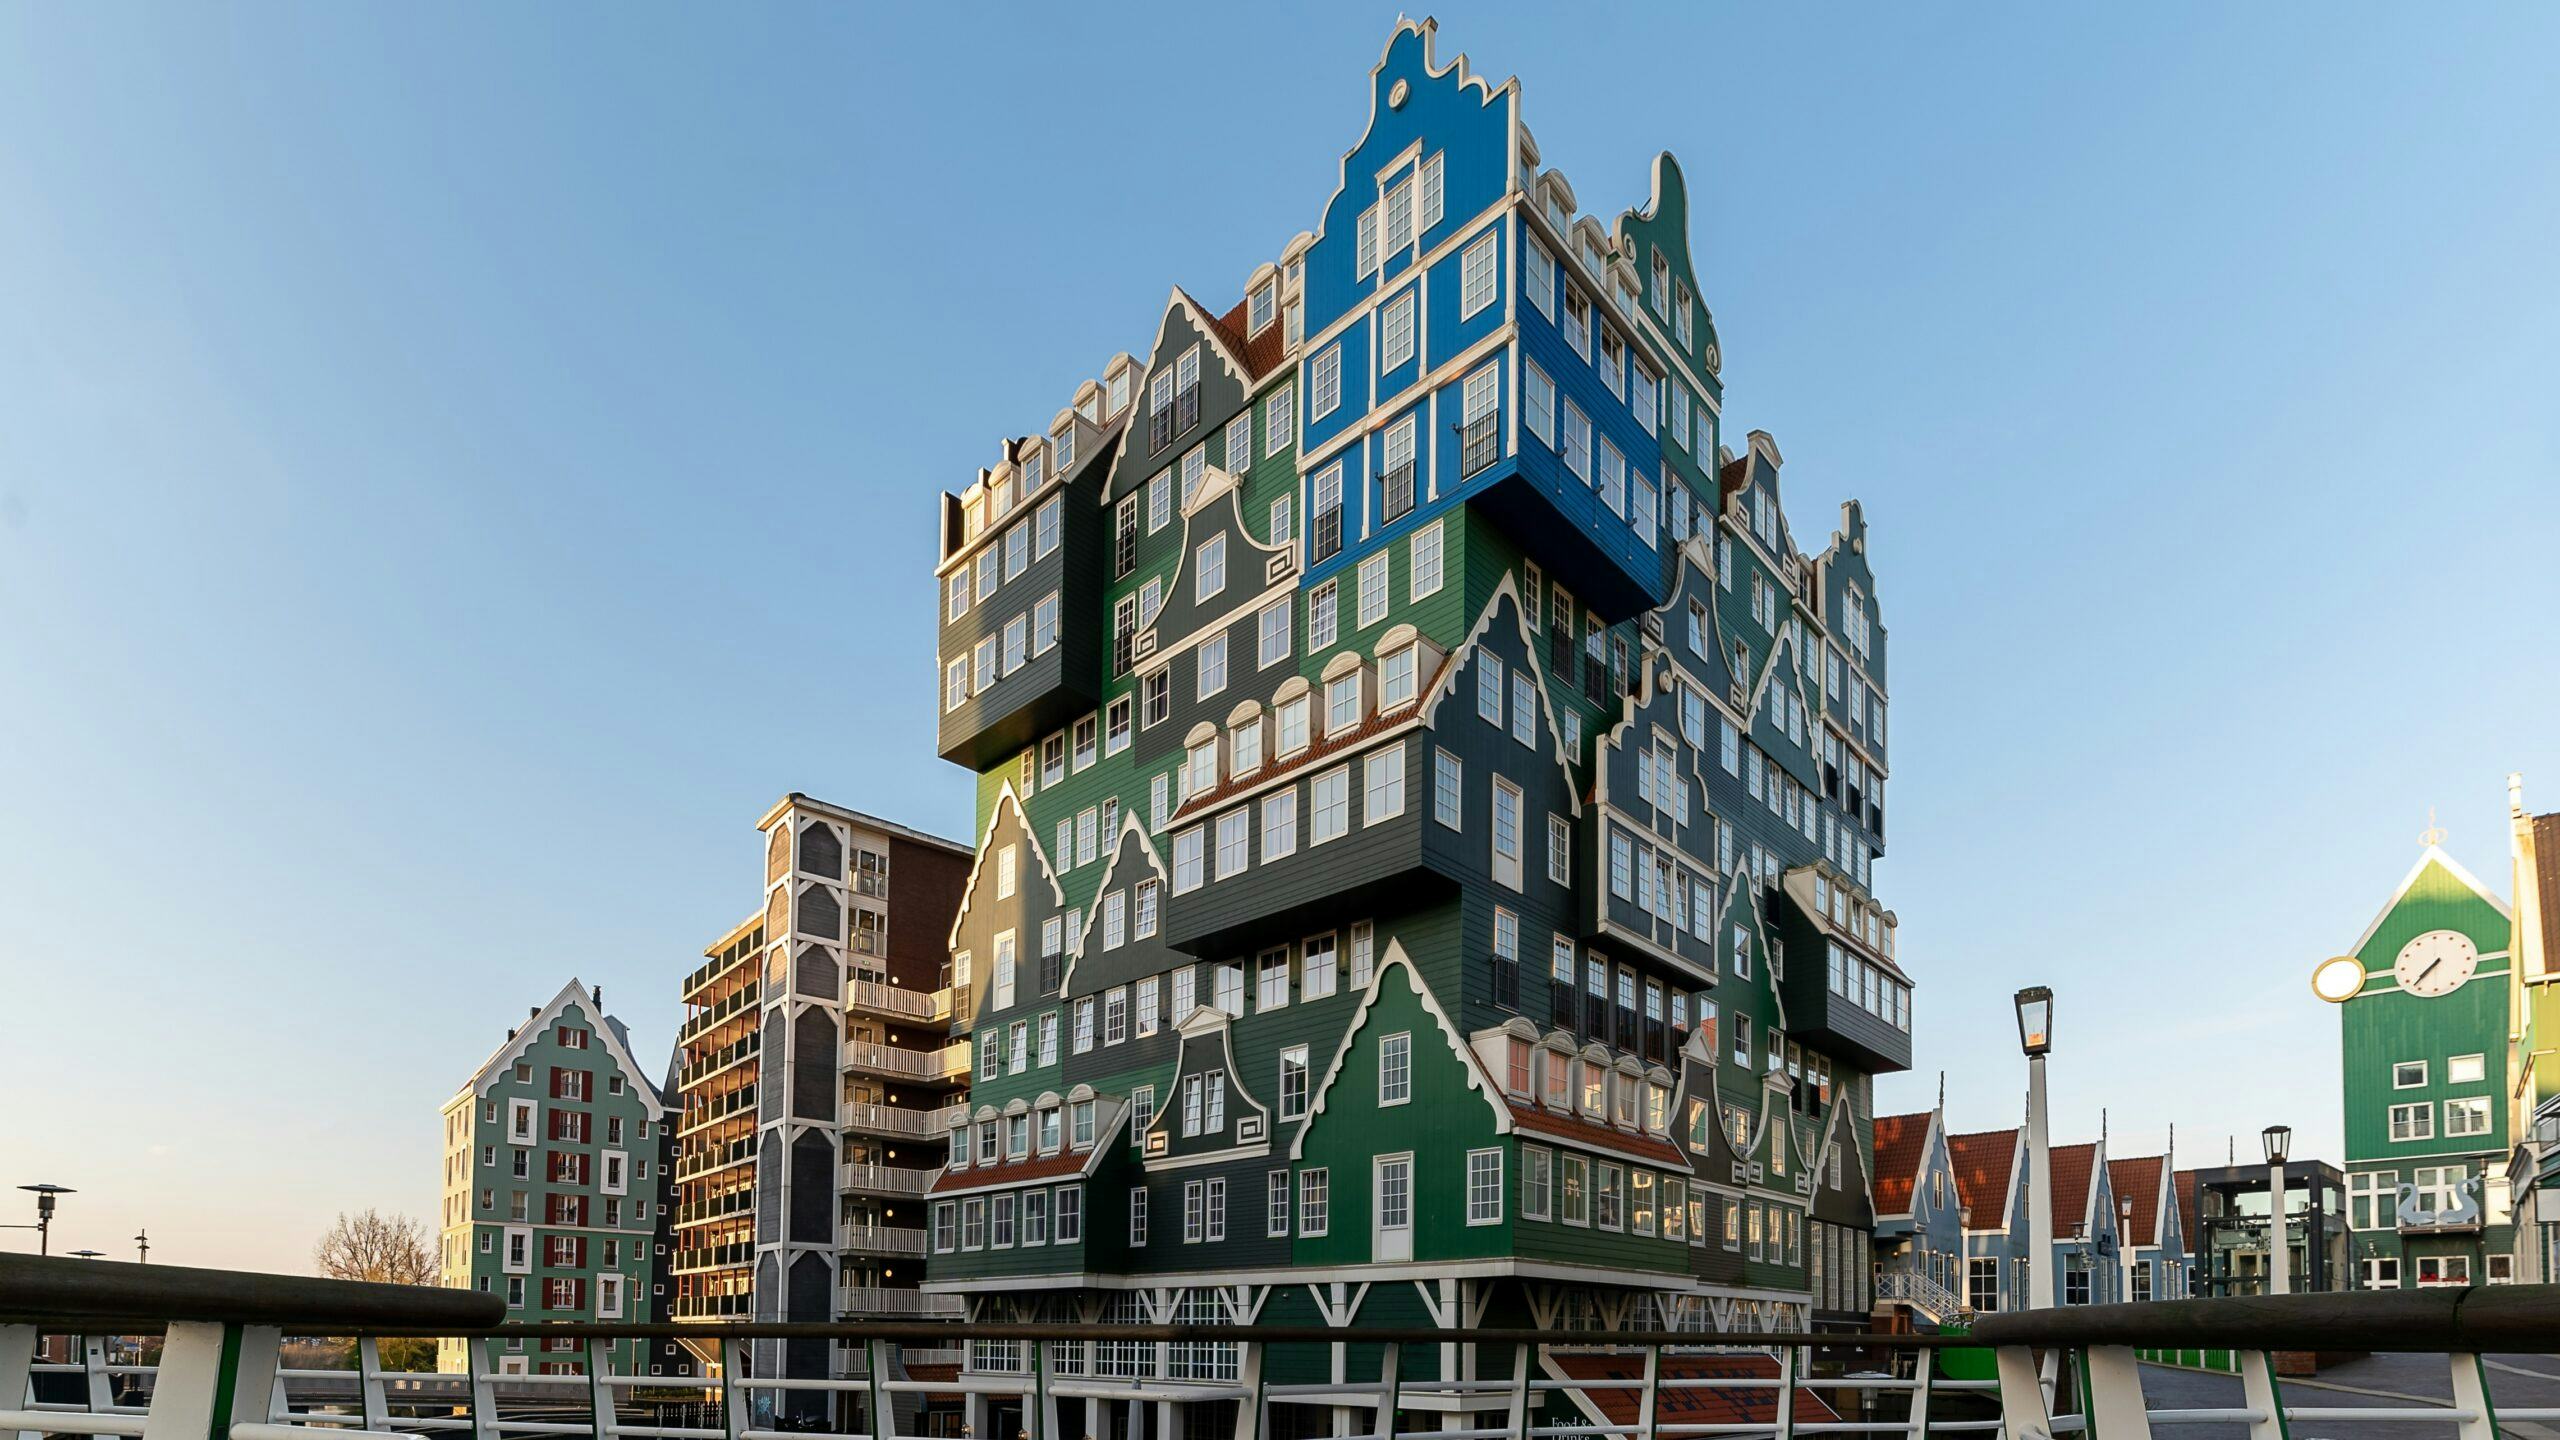 Soeters ontwierp onder meer het stationsgebied en stadhuis van Zaandam.